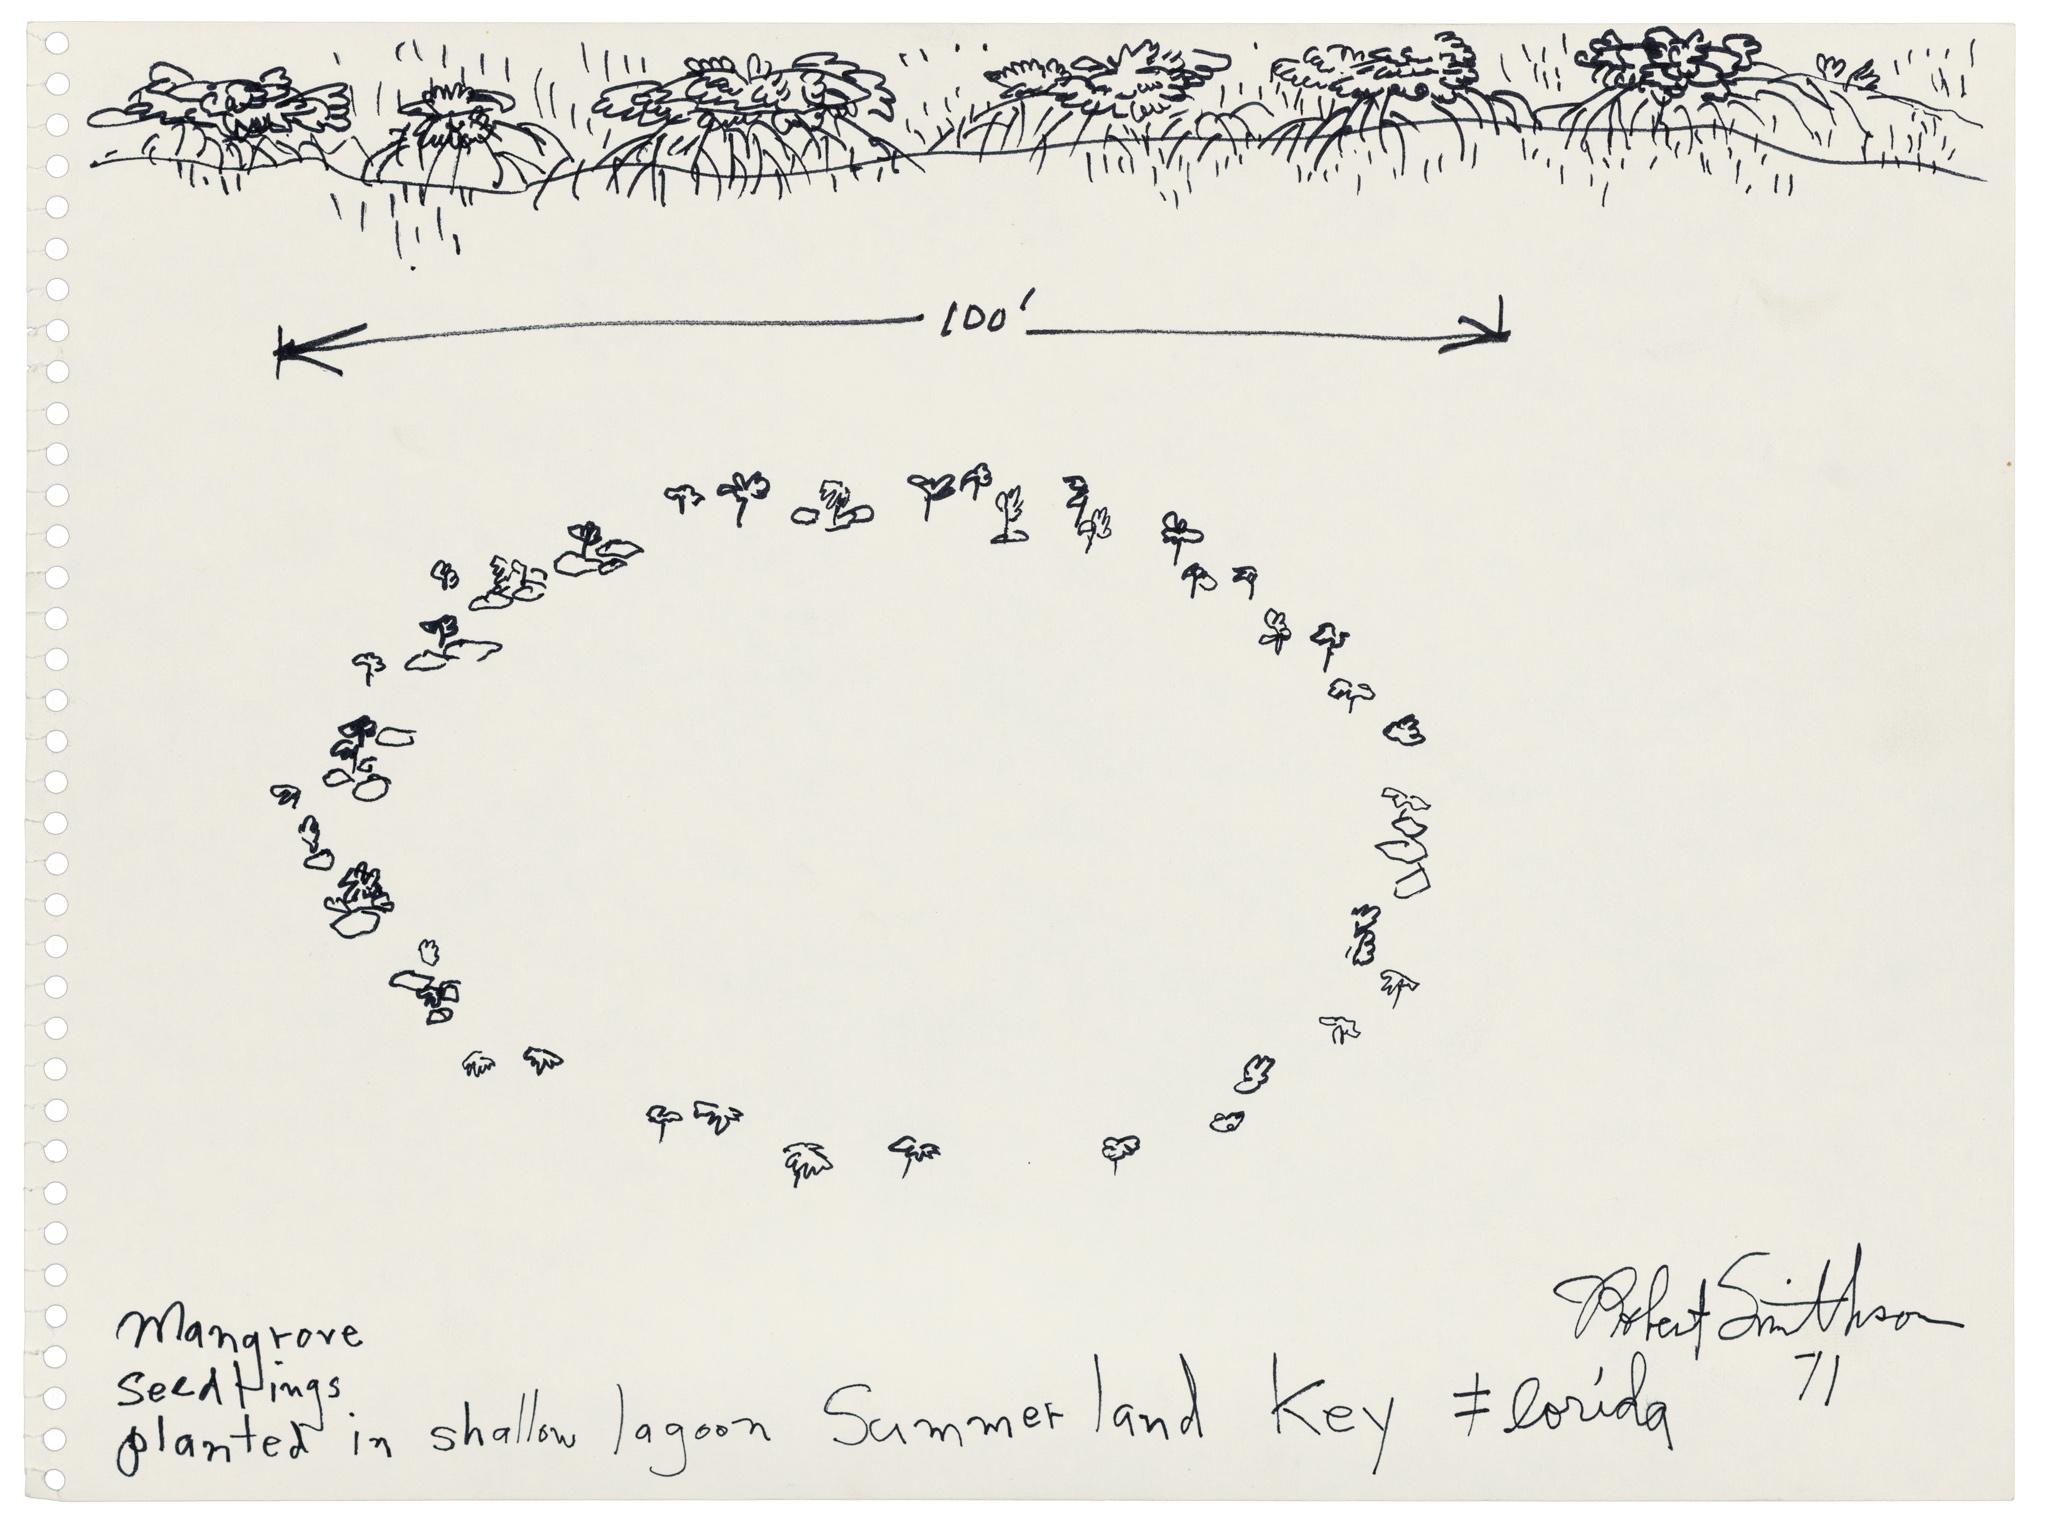 Robert Smithson's ink drawing of a ring of mangrove seedlings